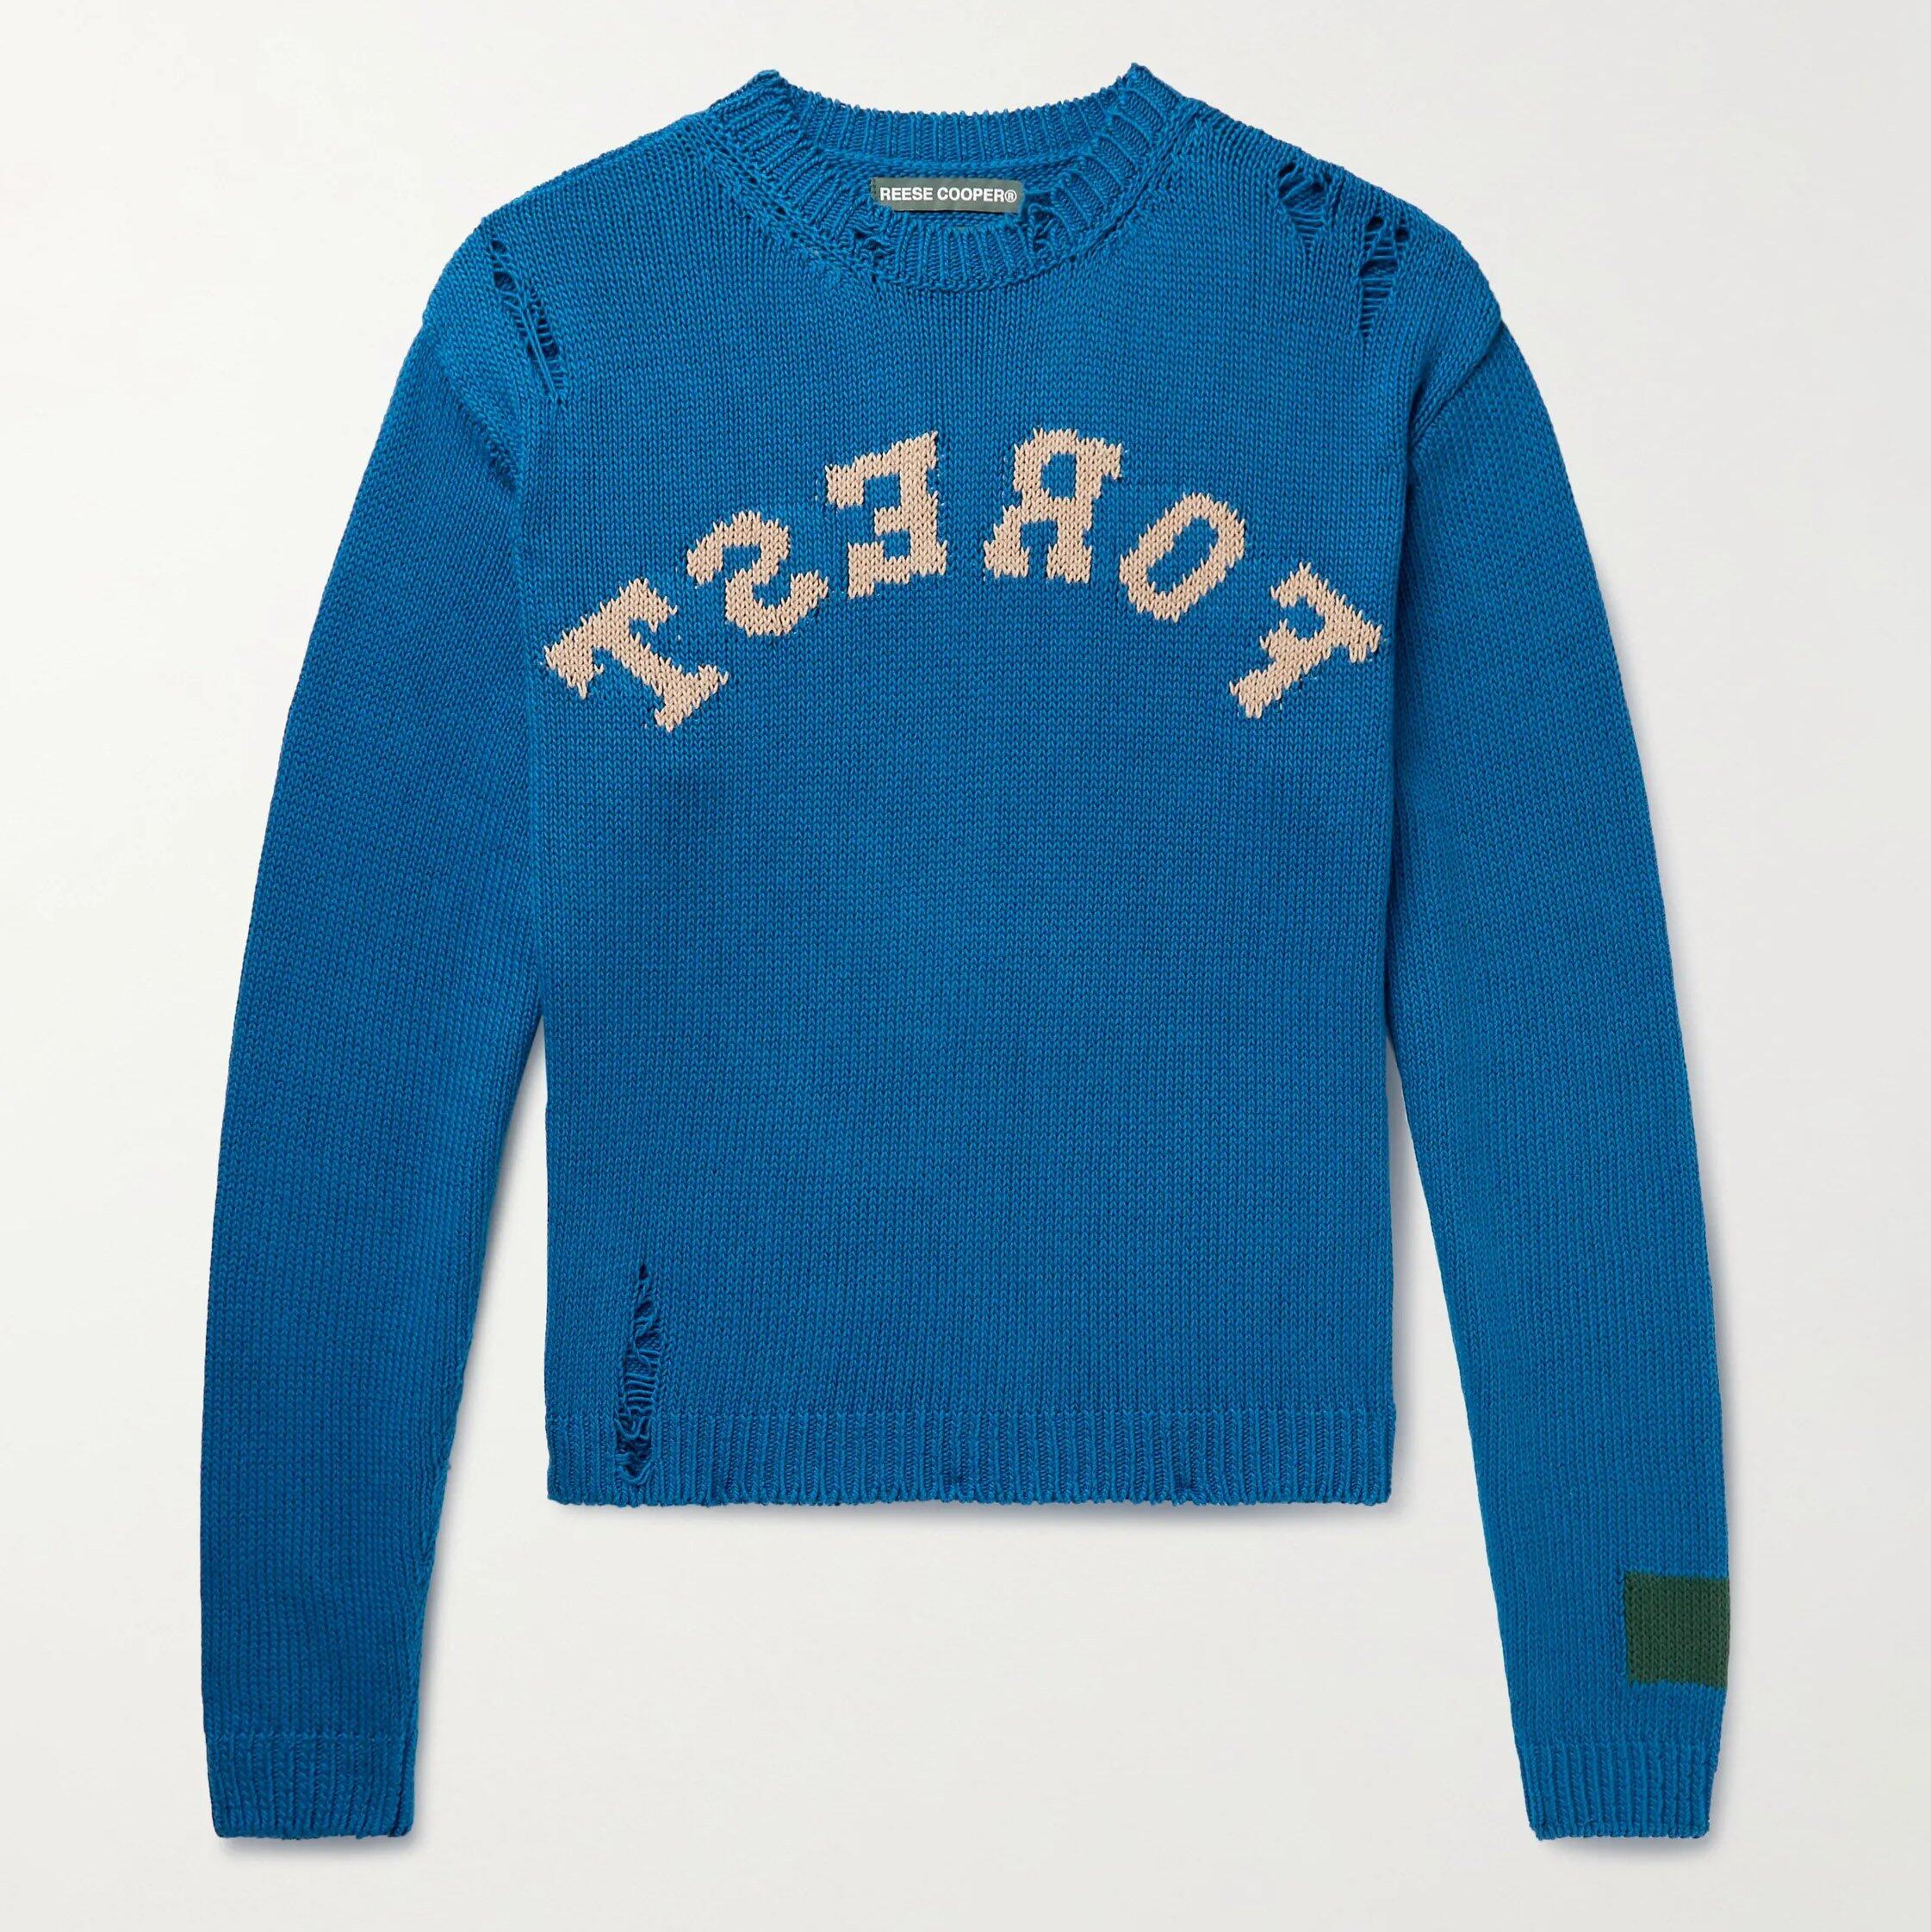 REESE COOPER® Distressed Intarsia Cotton Sweater